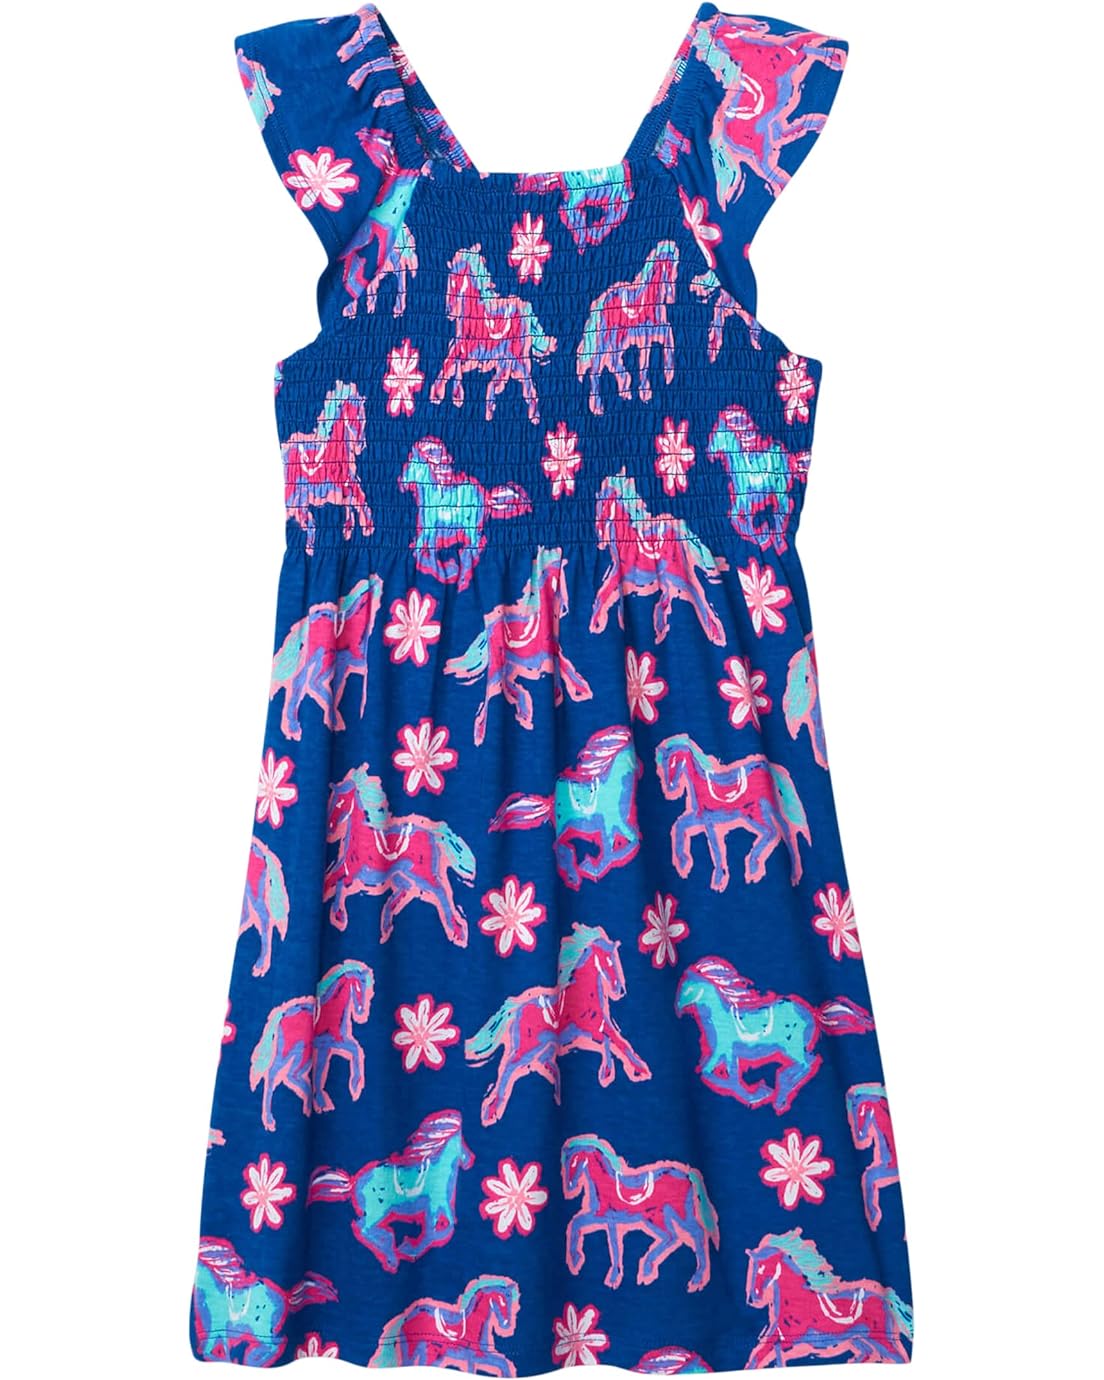 Hatley Kids Electric Horses Smocked Dress (Toddleru002FLittle Kidsu002FBig Kids)